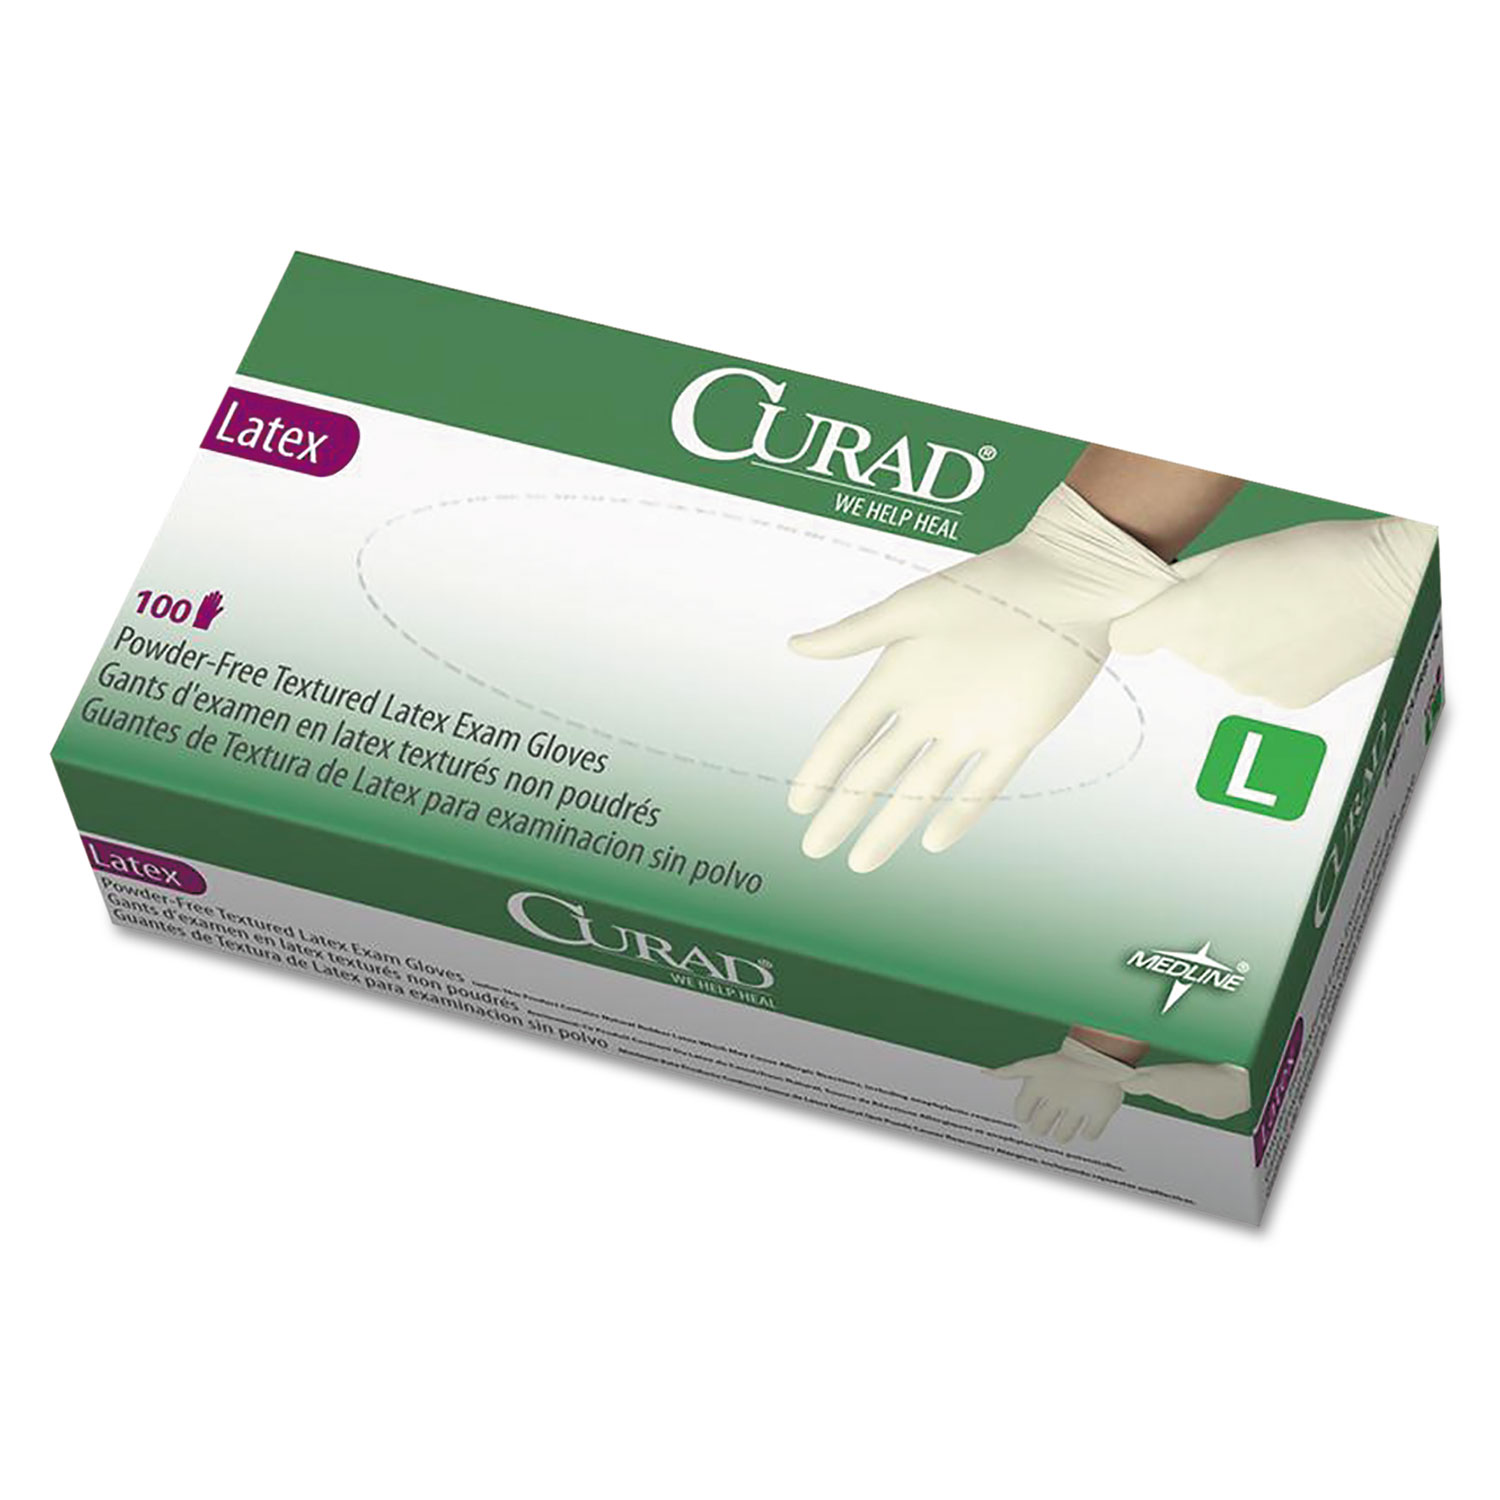  Curad CUR8106 Latex Exam Gloves, Powder-Free, Large, 100/Box (MIICUR8106) 